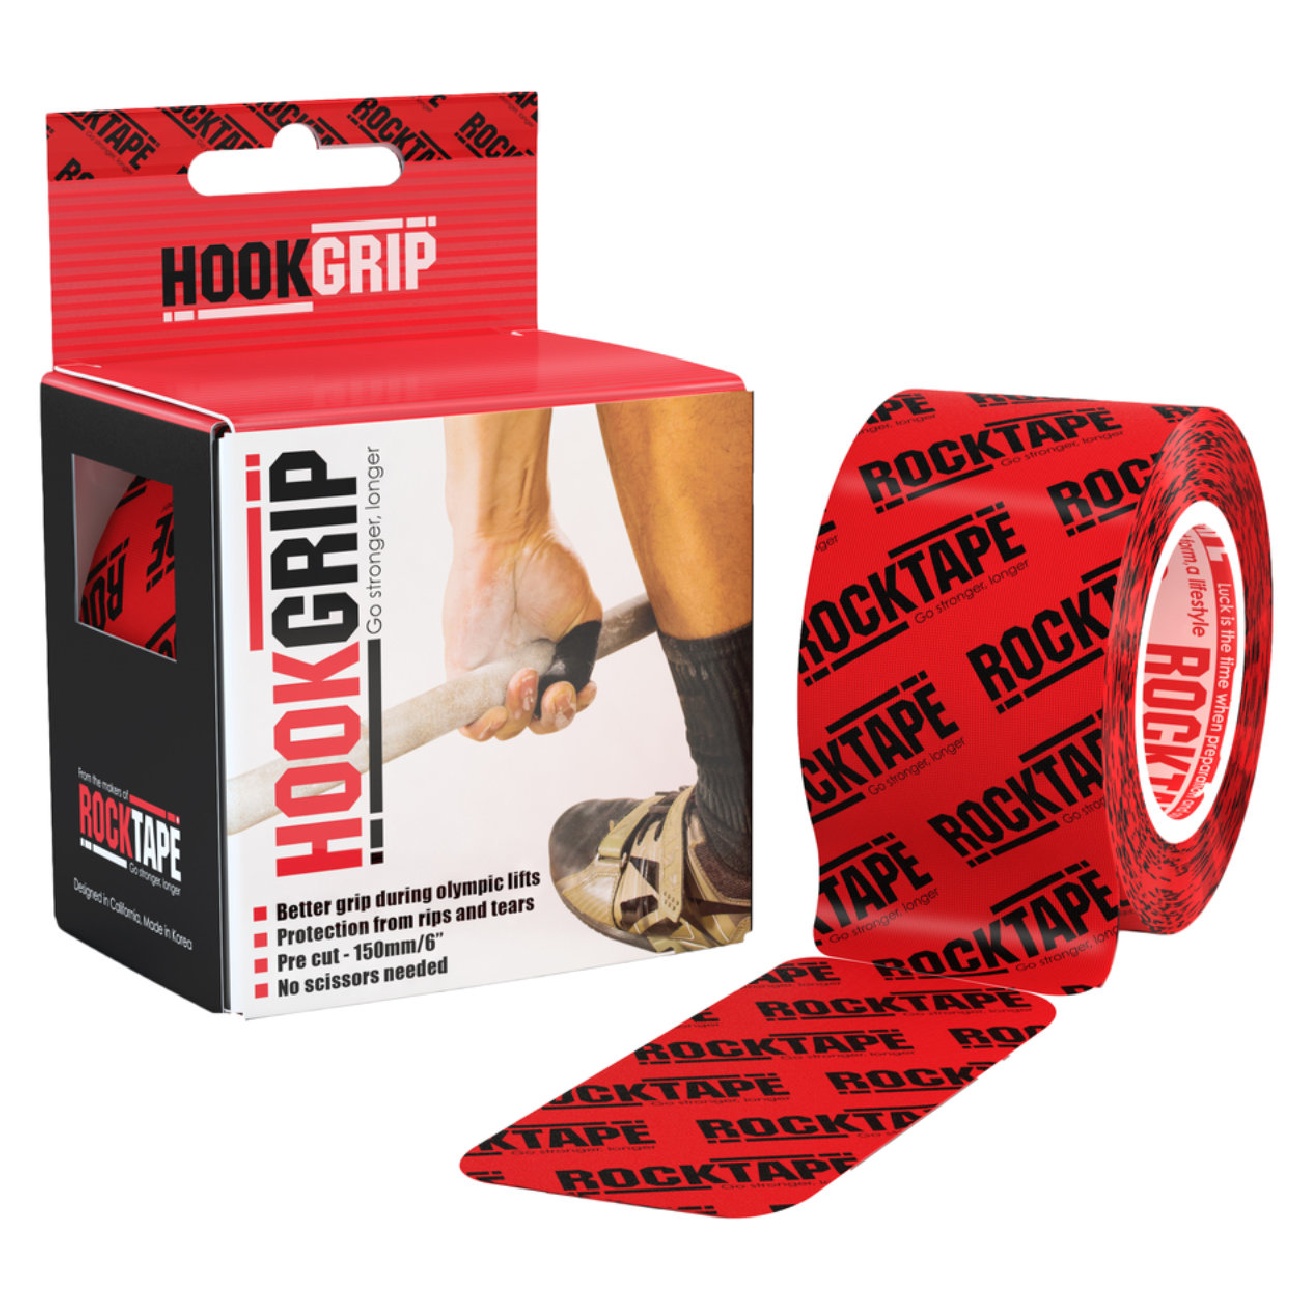 RockTape HookGrip Tape for Thumbs